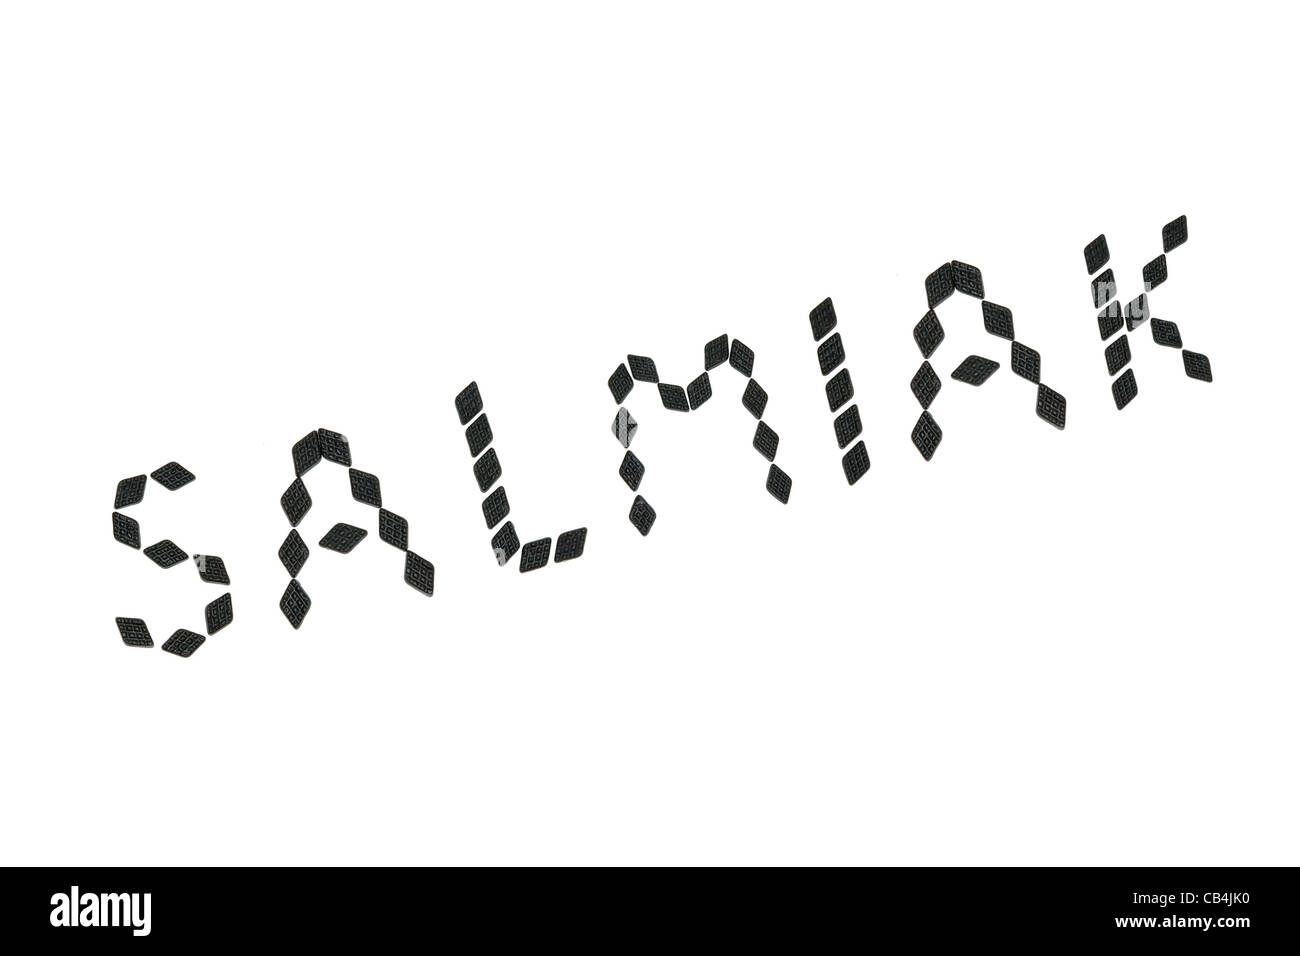 Word salmiak spelled in soft salmiak - salty liquorice candy, on white background Stock Photo